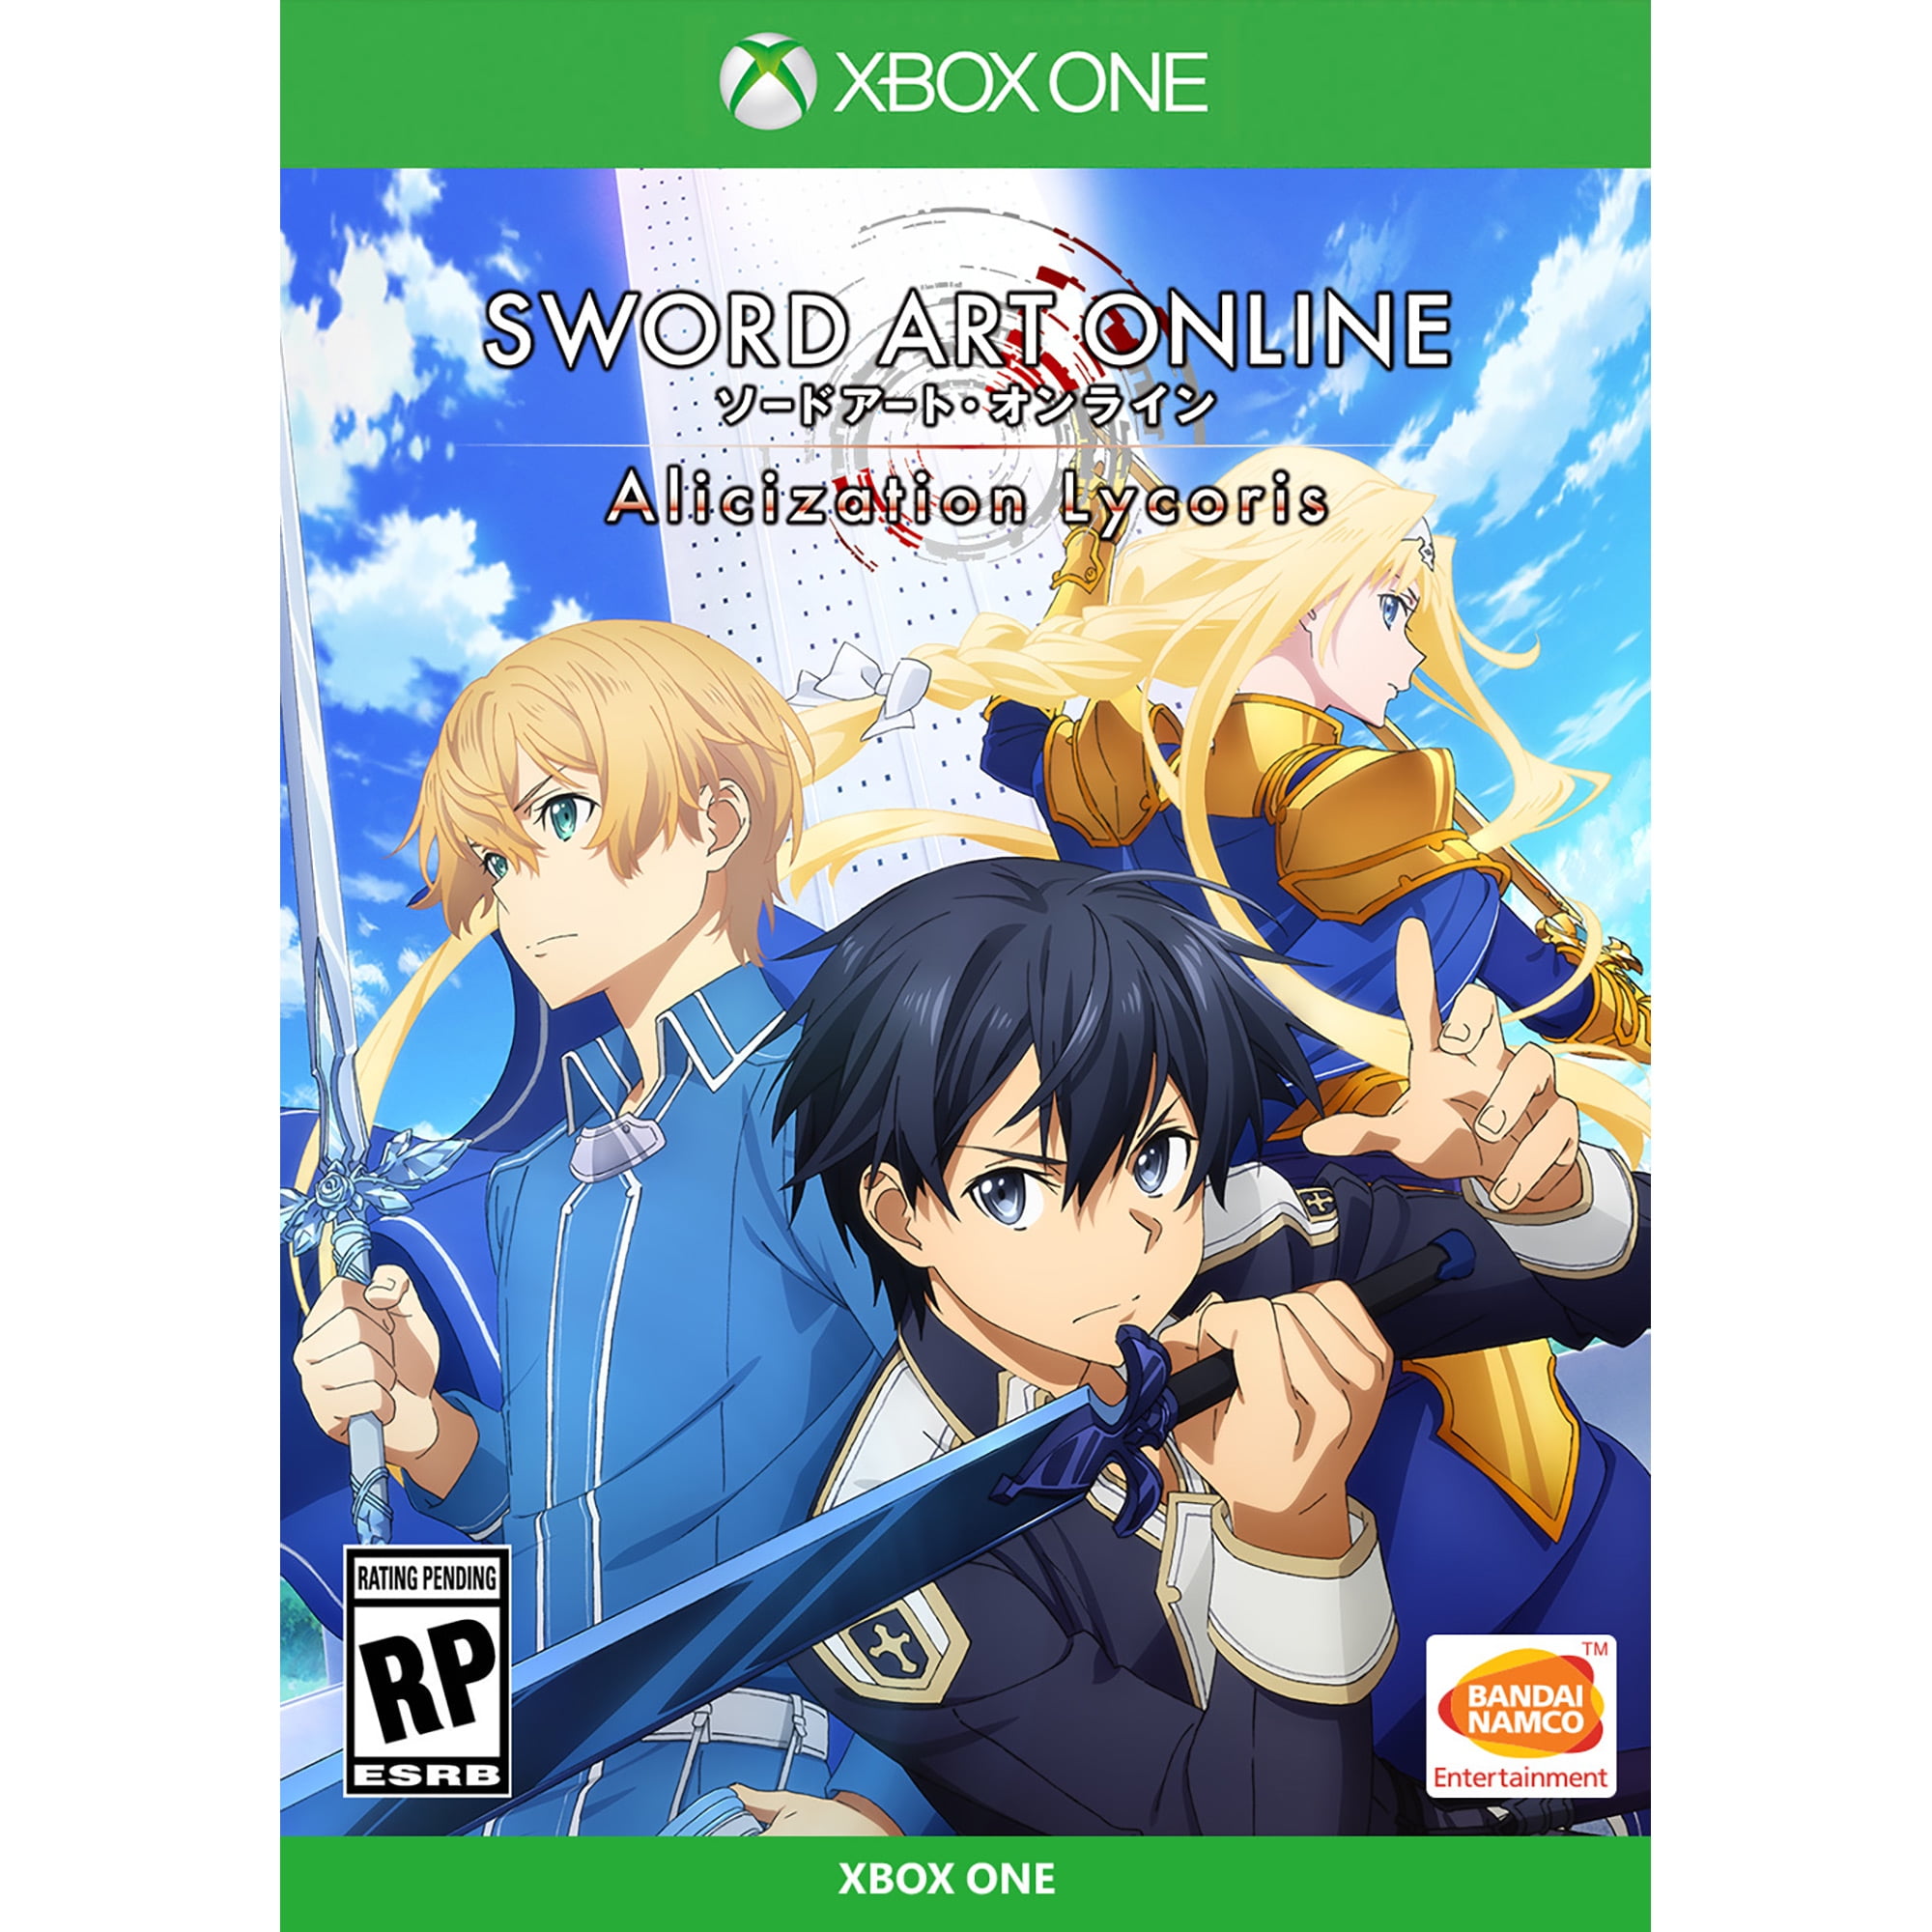 Sword Art Online Alicization Lycoris Bandai Namco Xbox One